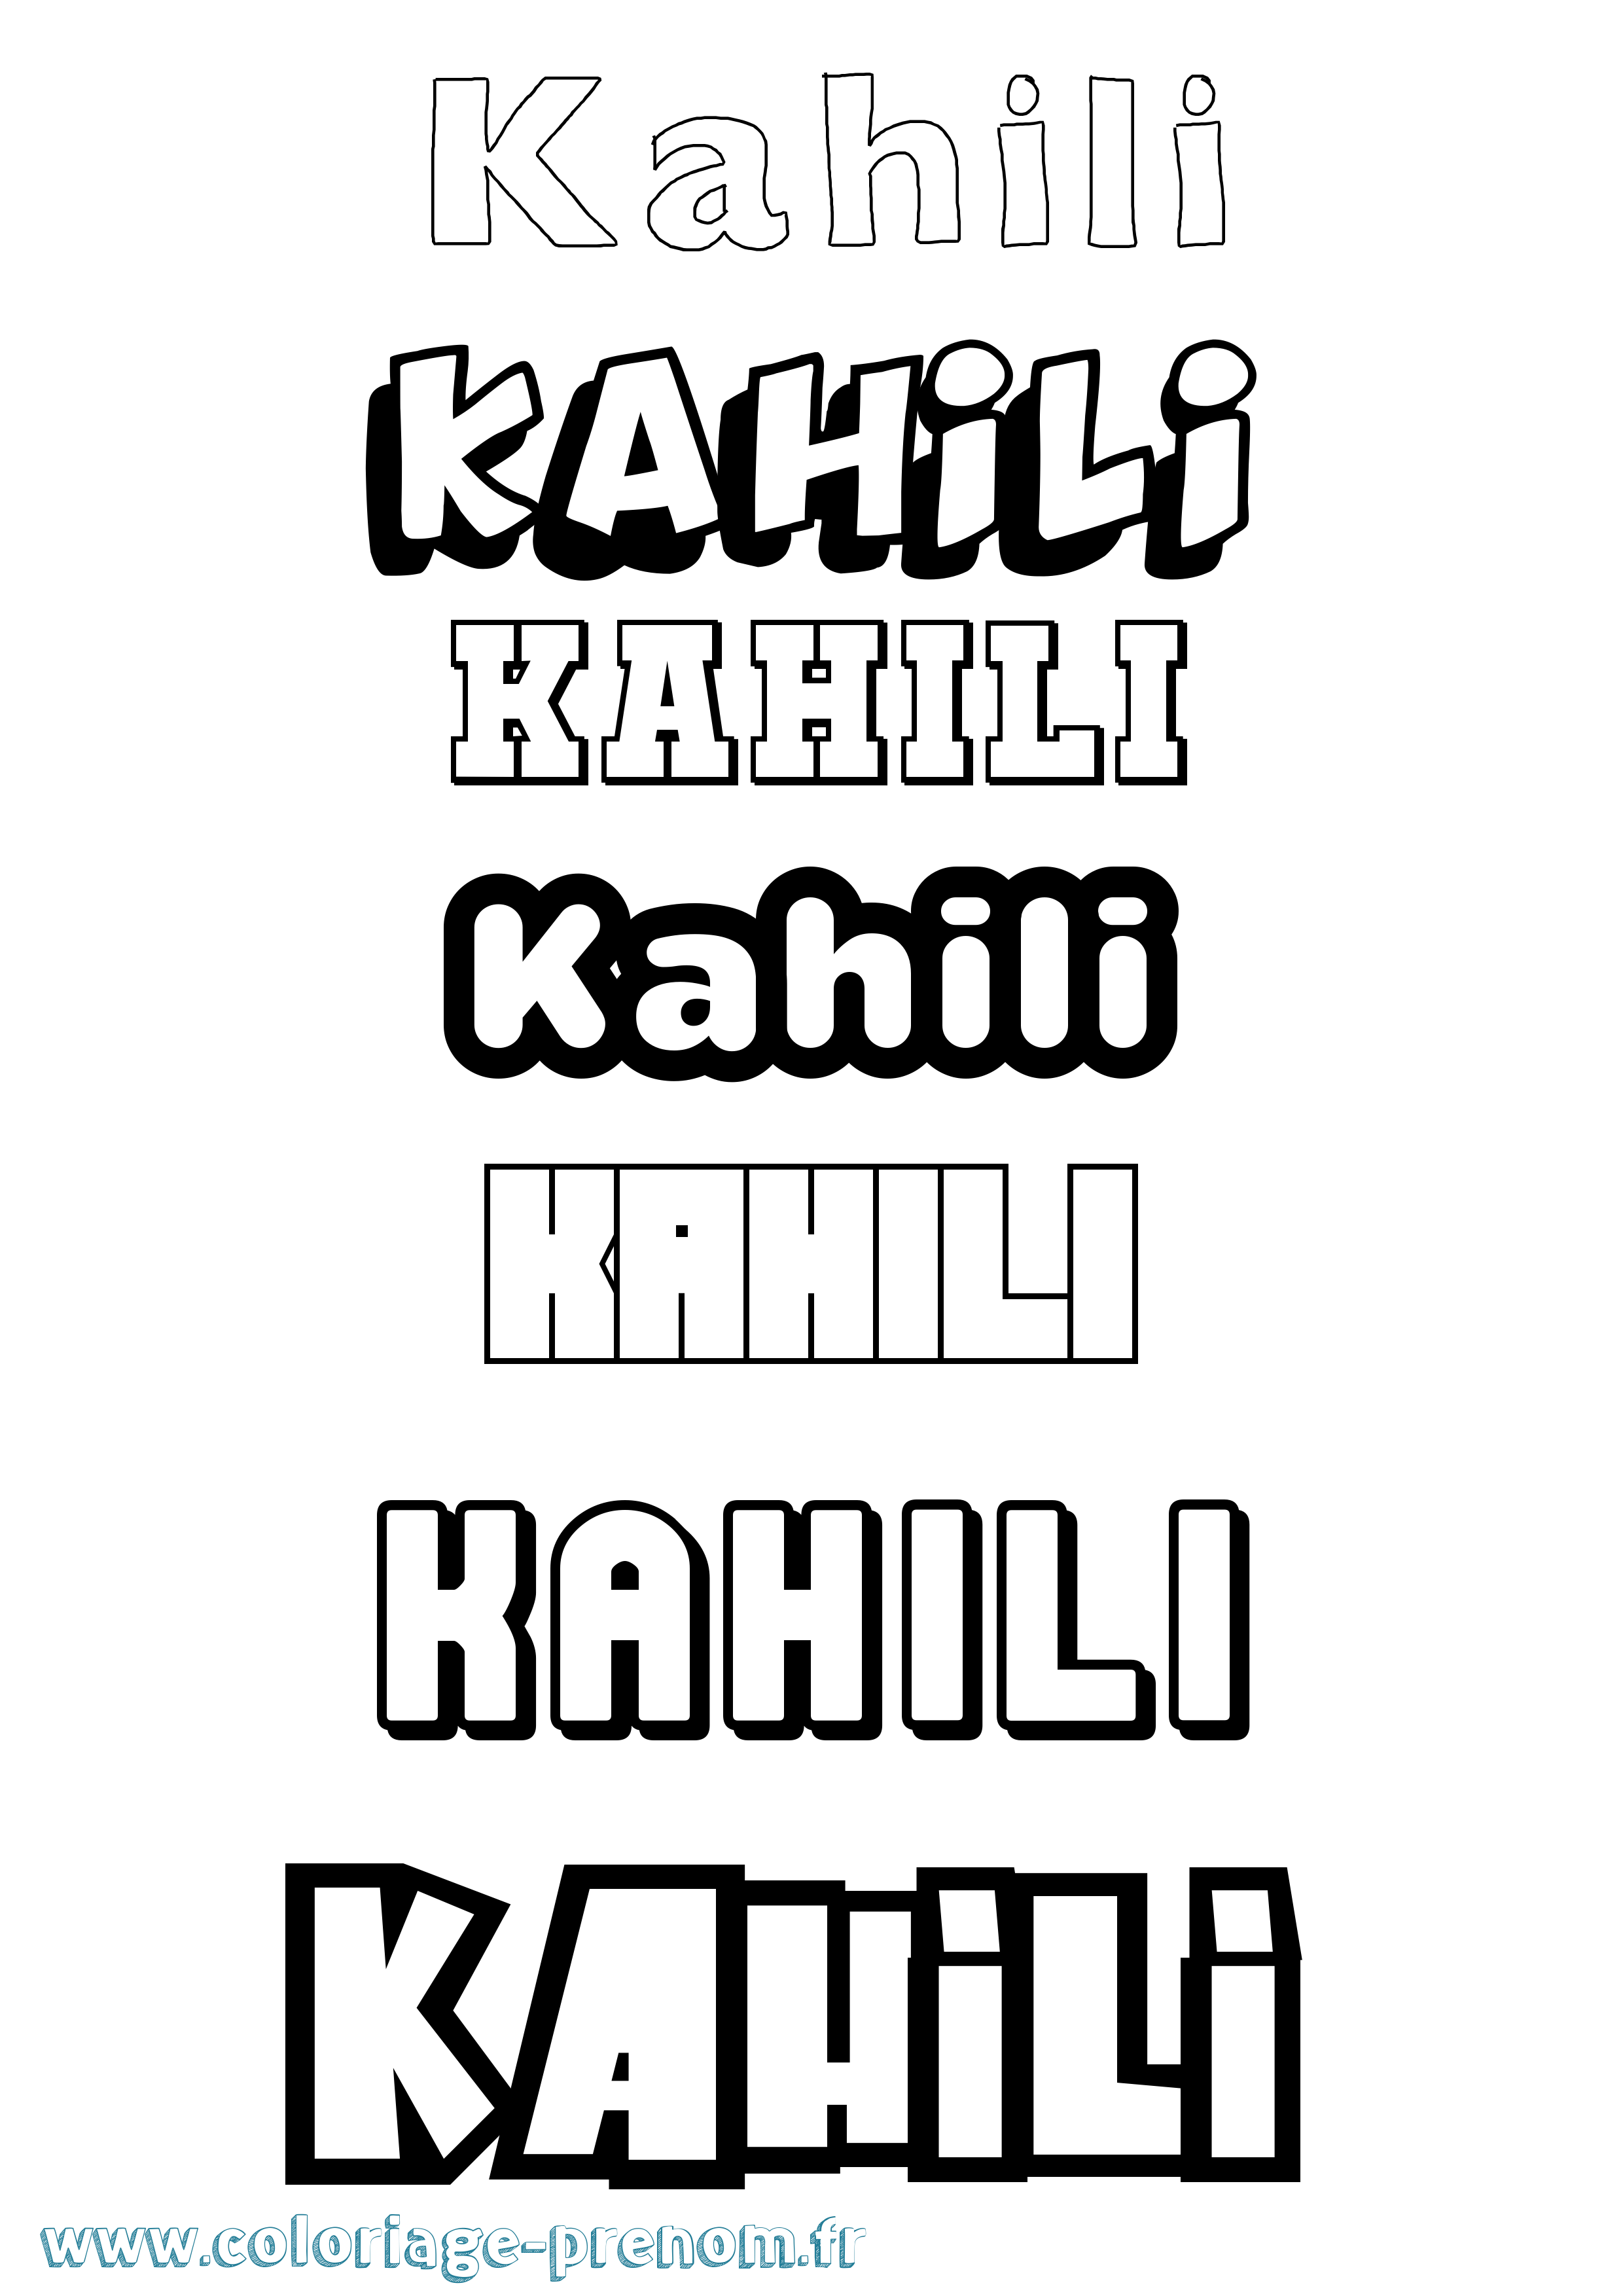 Coloriage prénom Kahili Simple